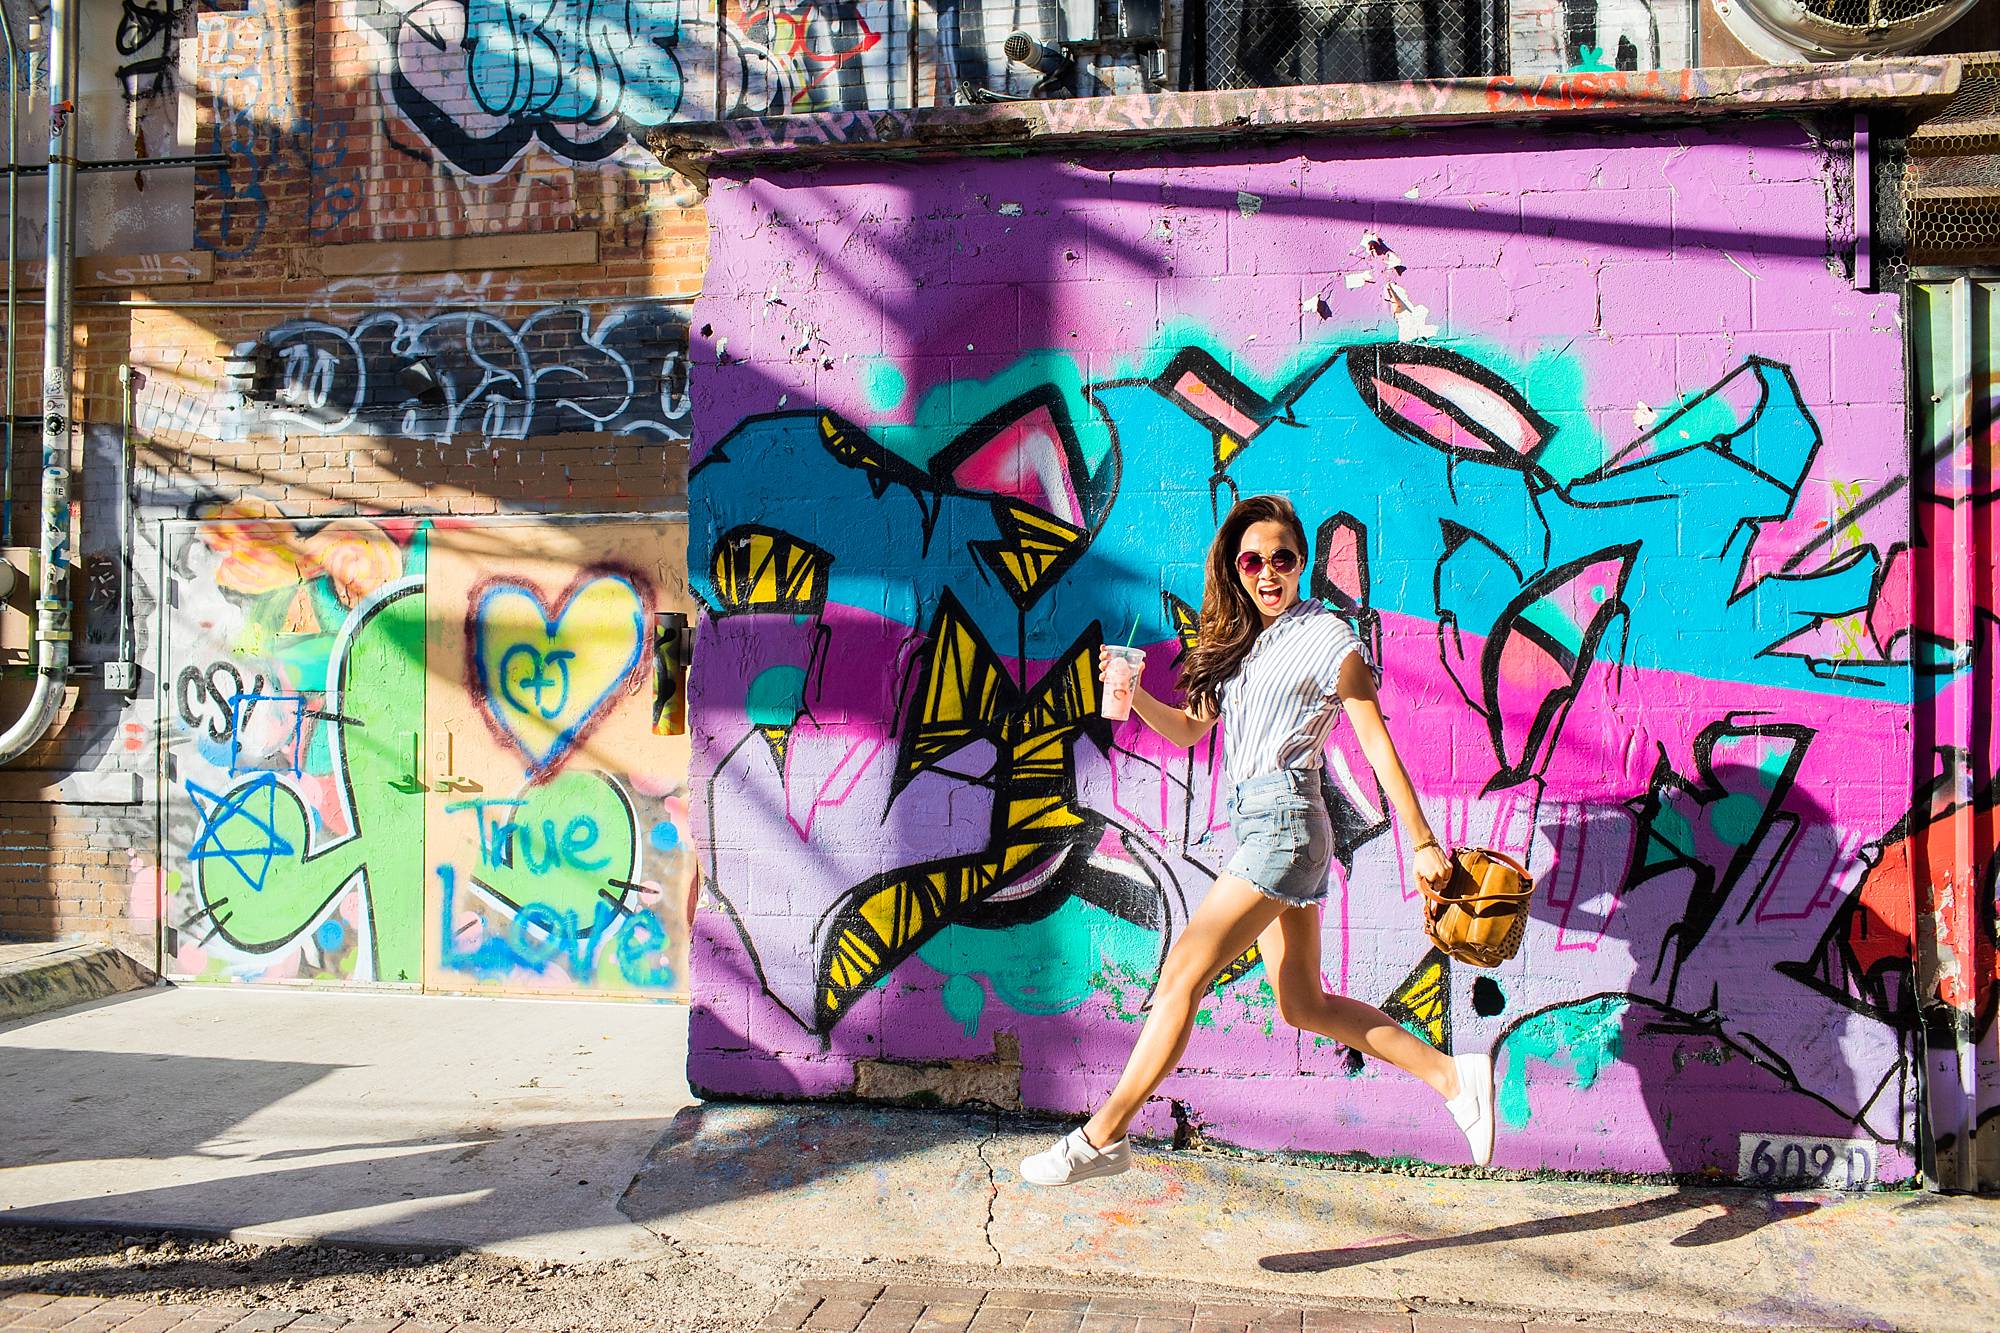 art alley graffiti walls in rapid city, South Dakota blogger Diana Elizabeth jumping in air